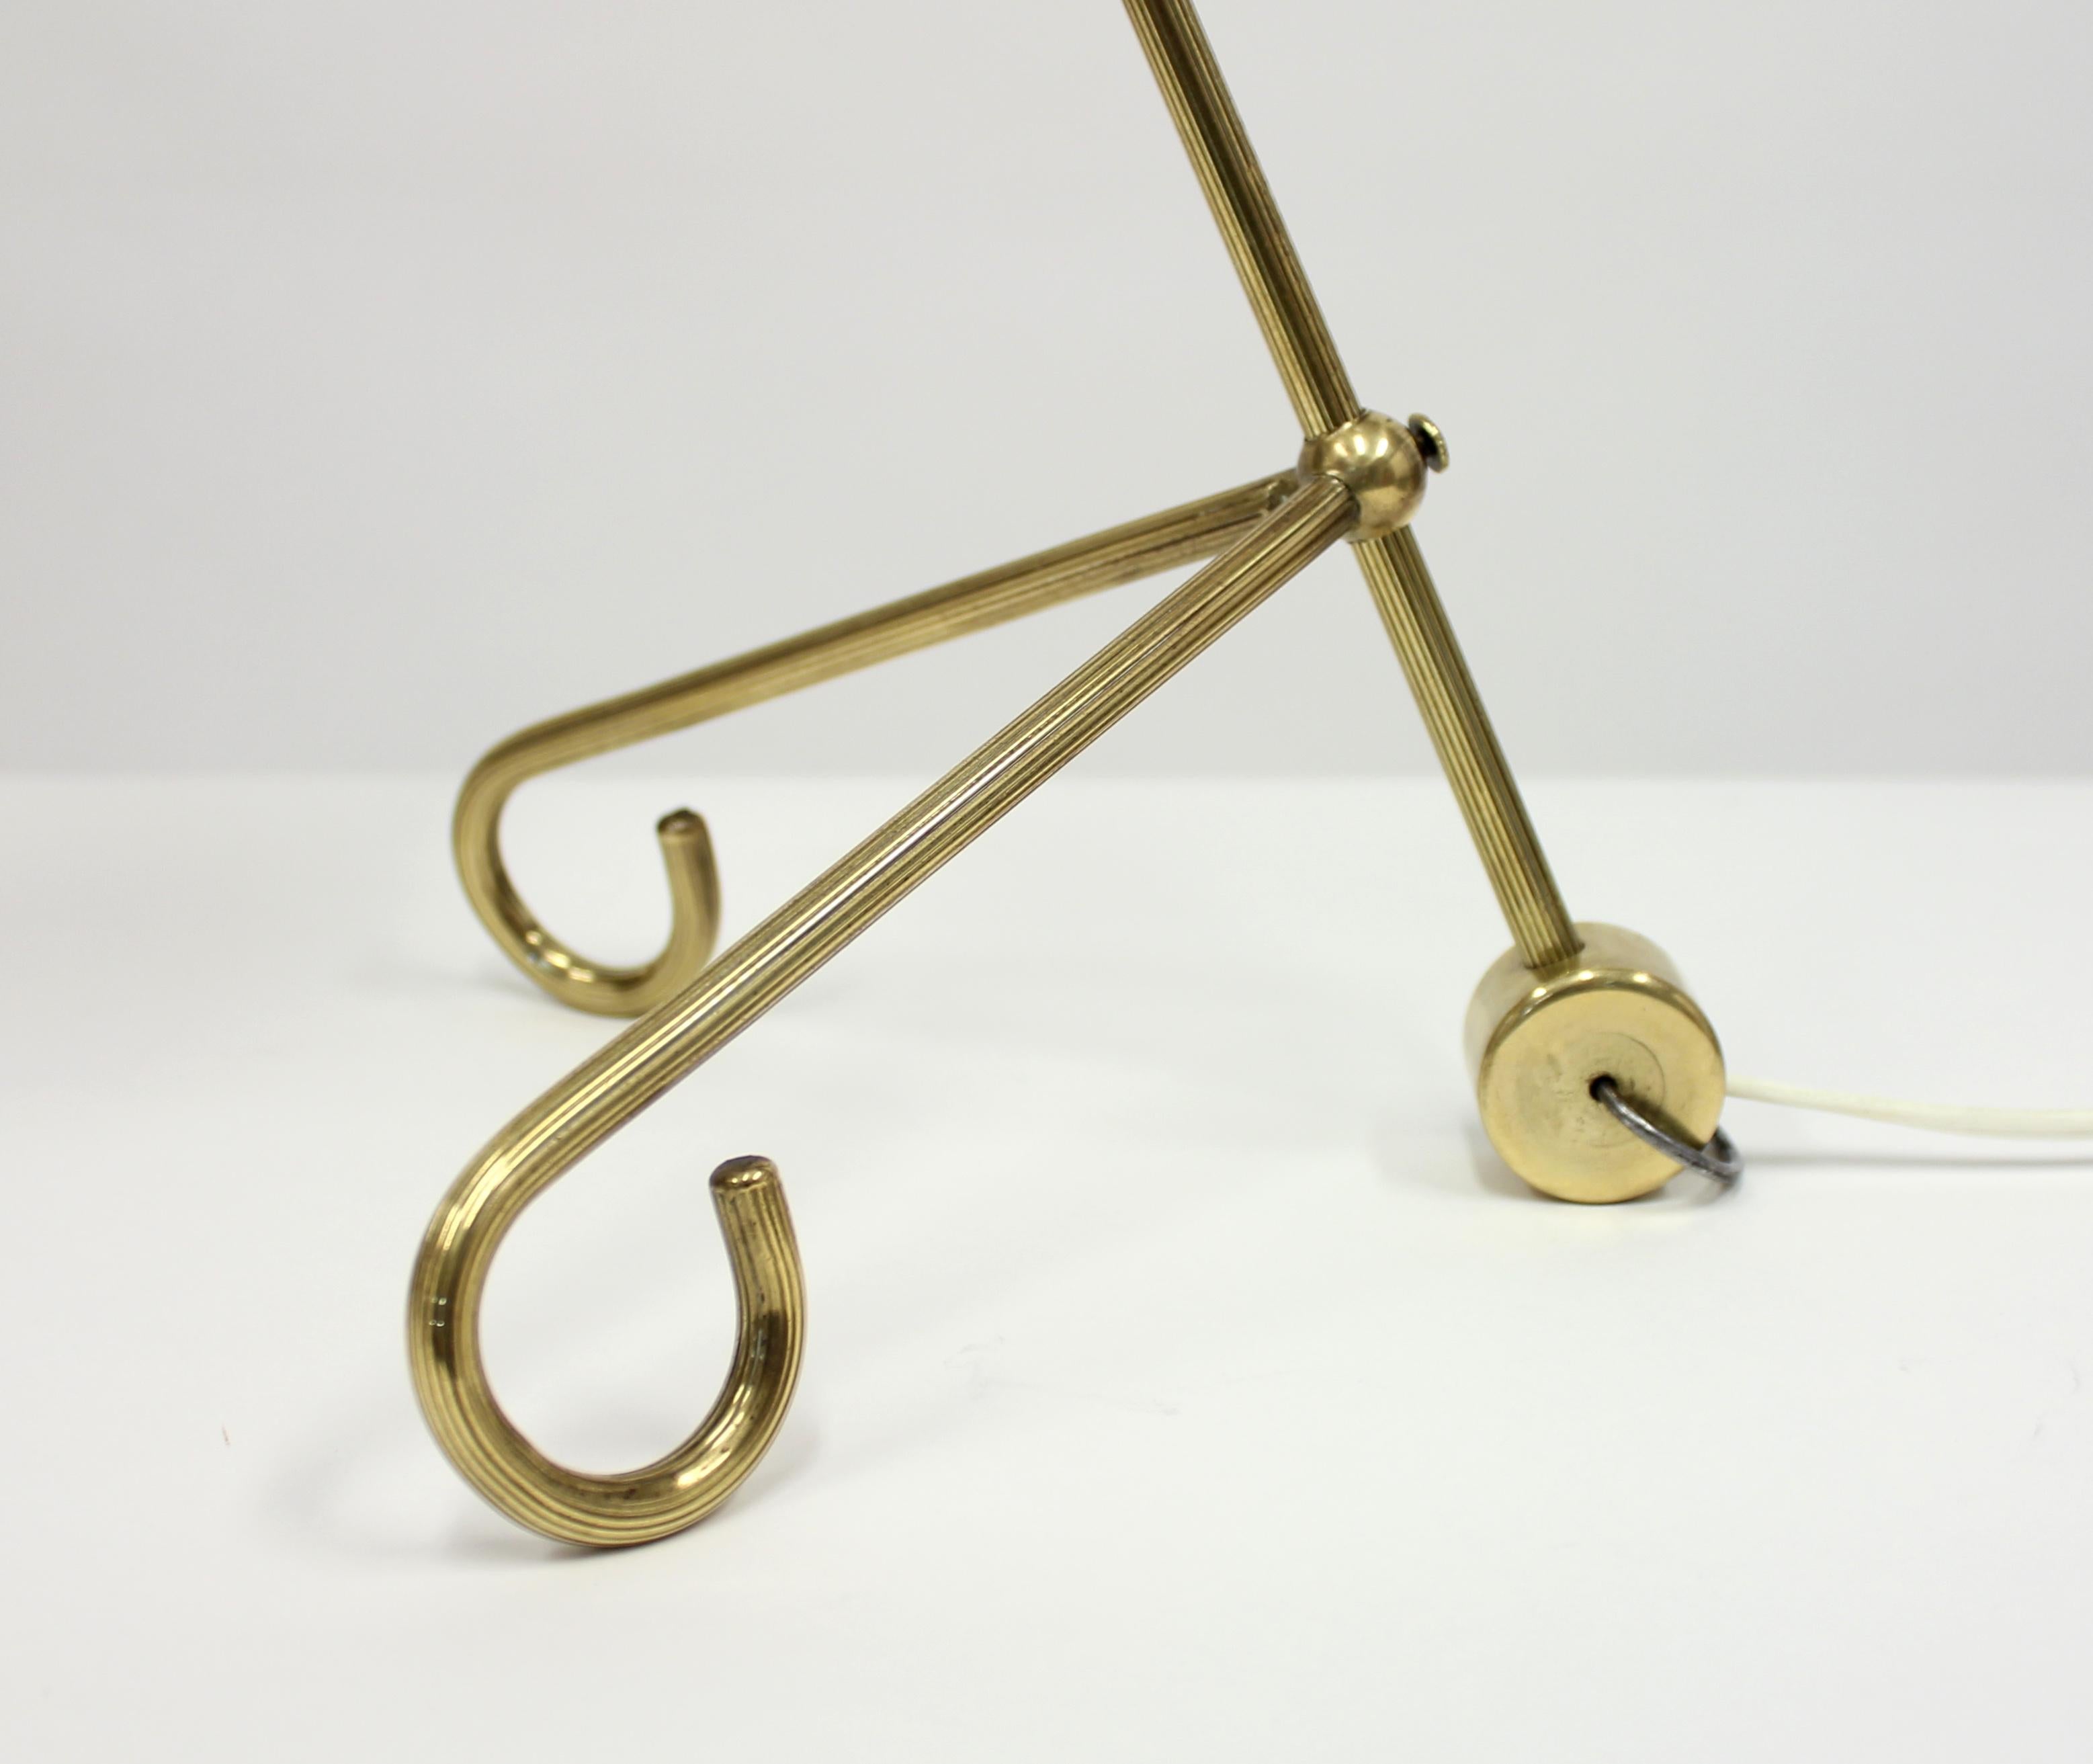 Scandinavian Modern Midcentury Brass Table Lamp, Attribute to Svend Aage Holm-Sørensen, 1950s